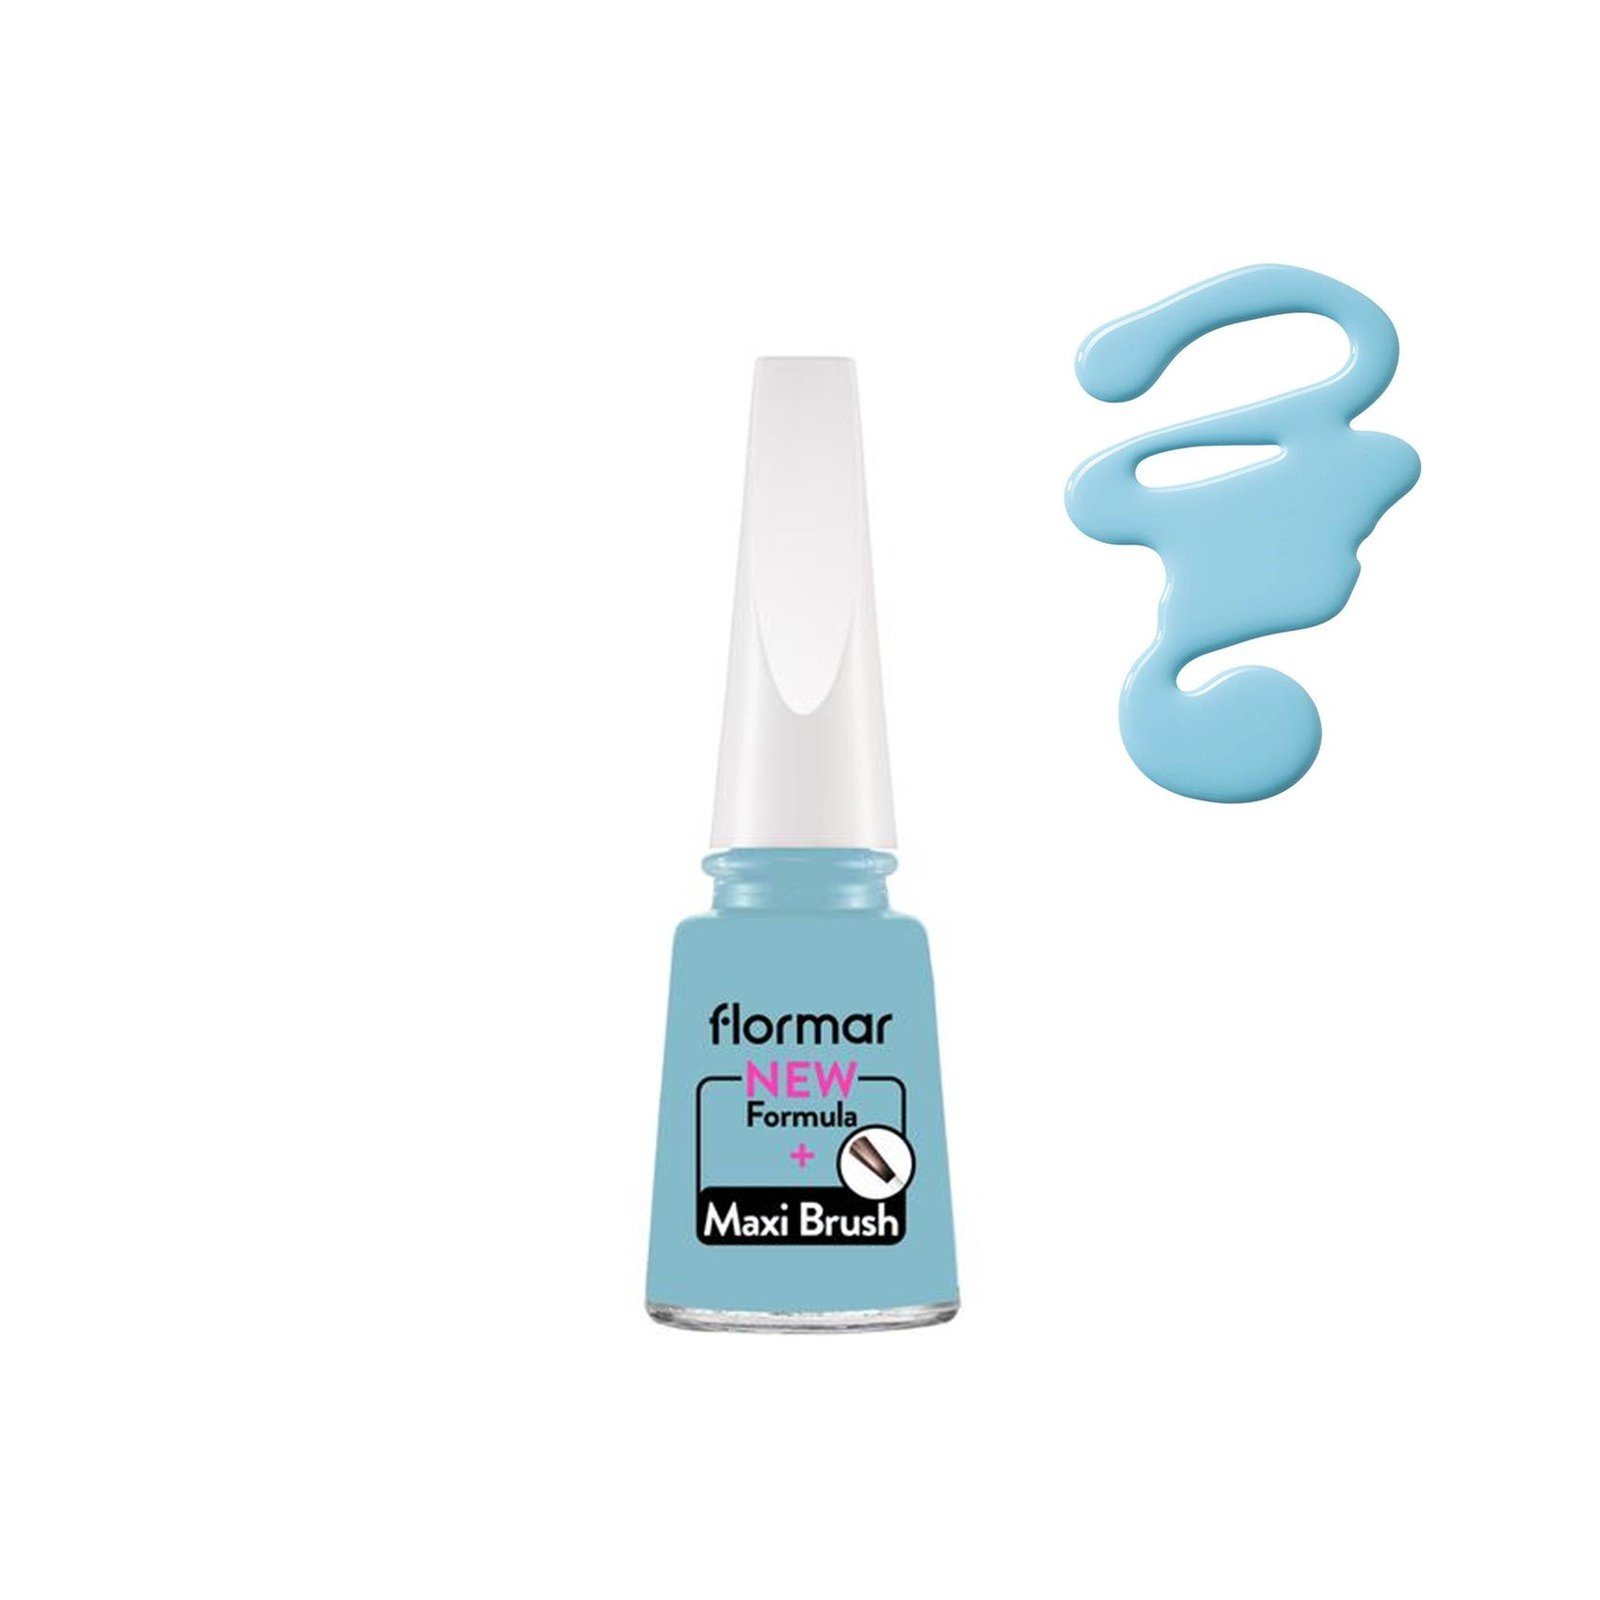 Flormar Nail Enamel 423 Baby Blue 11ml (0.37 fl oz)